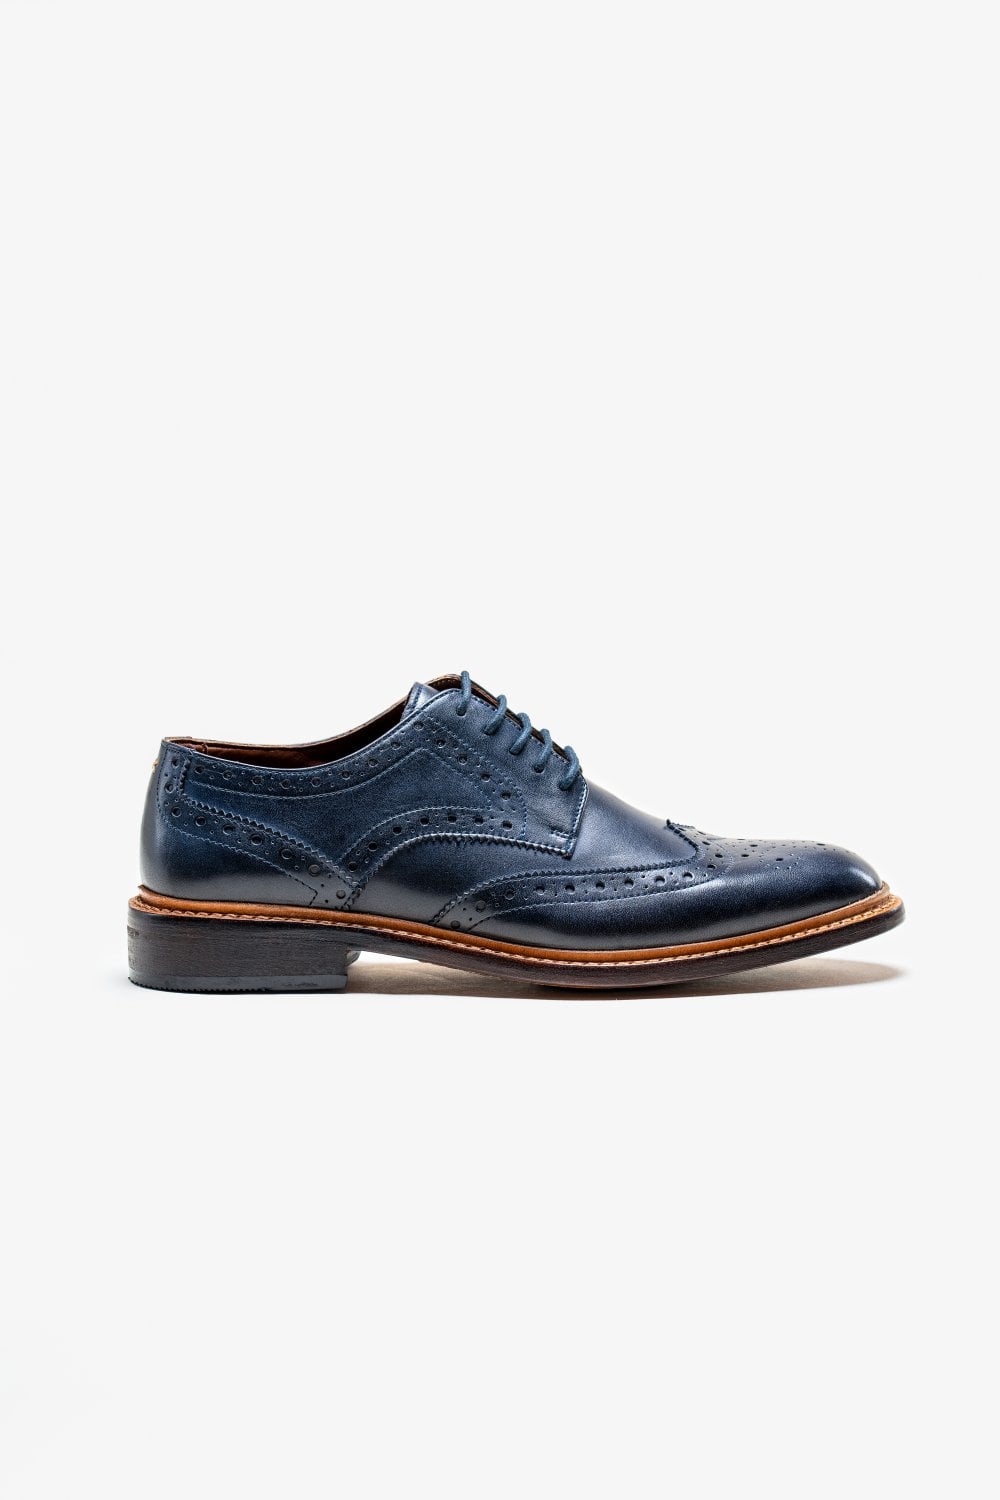 Cavani Premium Merton Chaussures - Bleu Marine - Schoenen